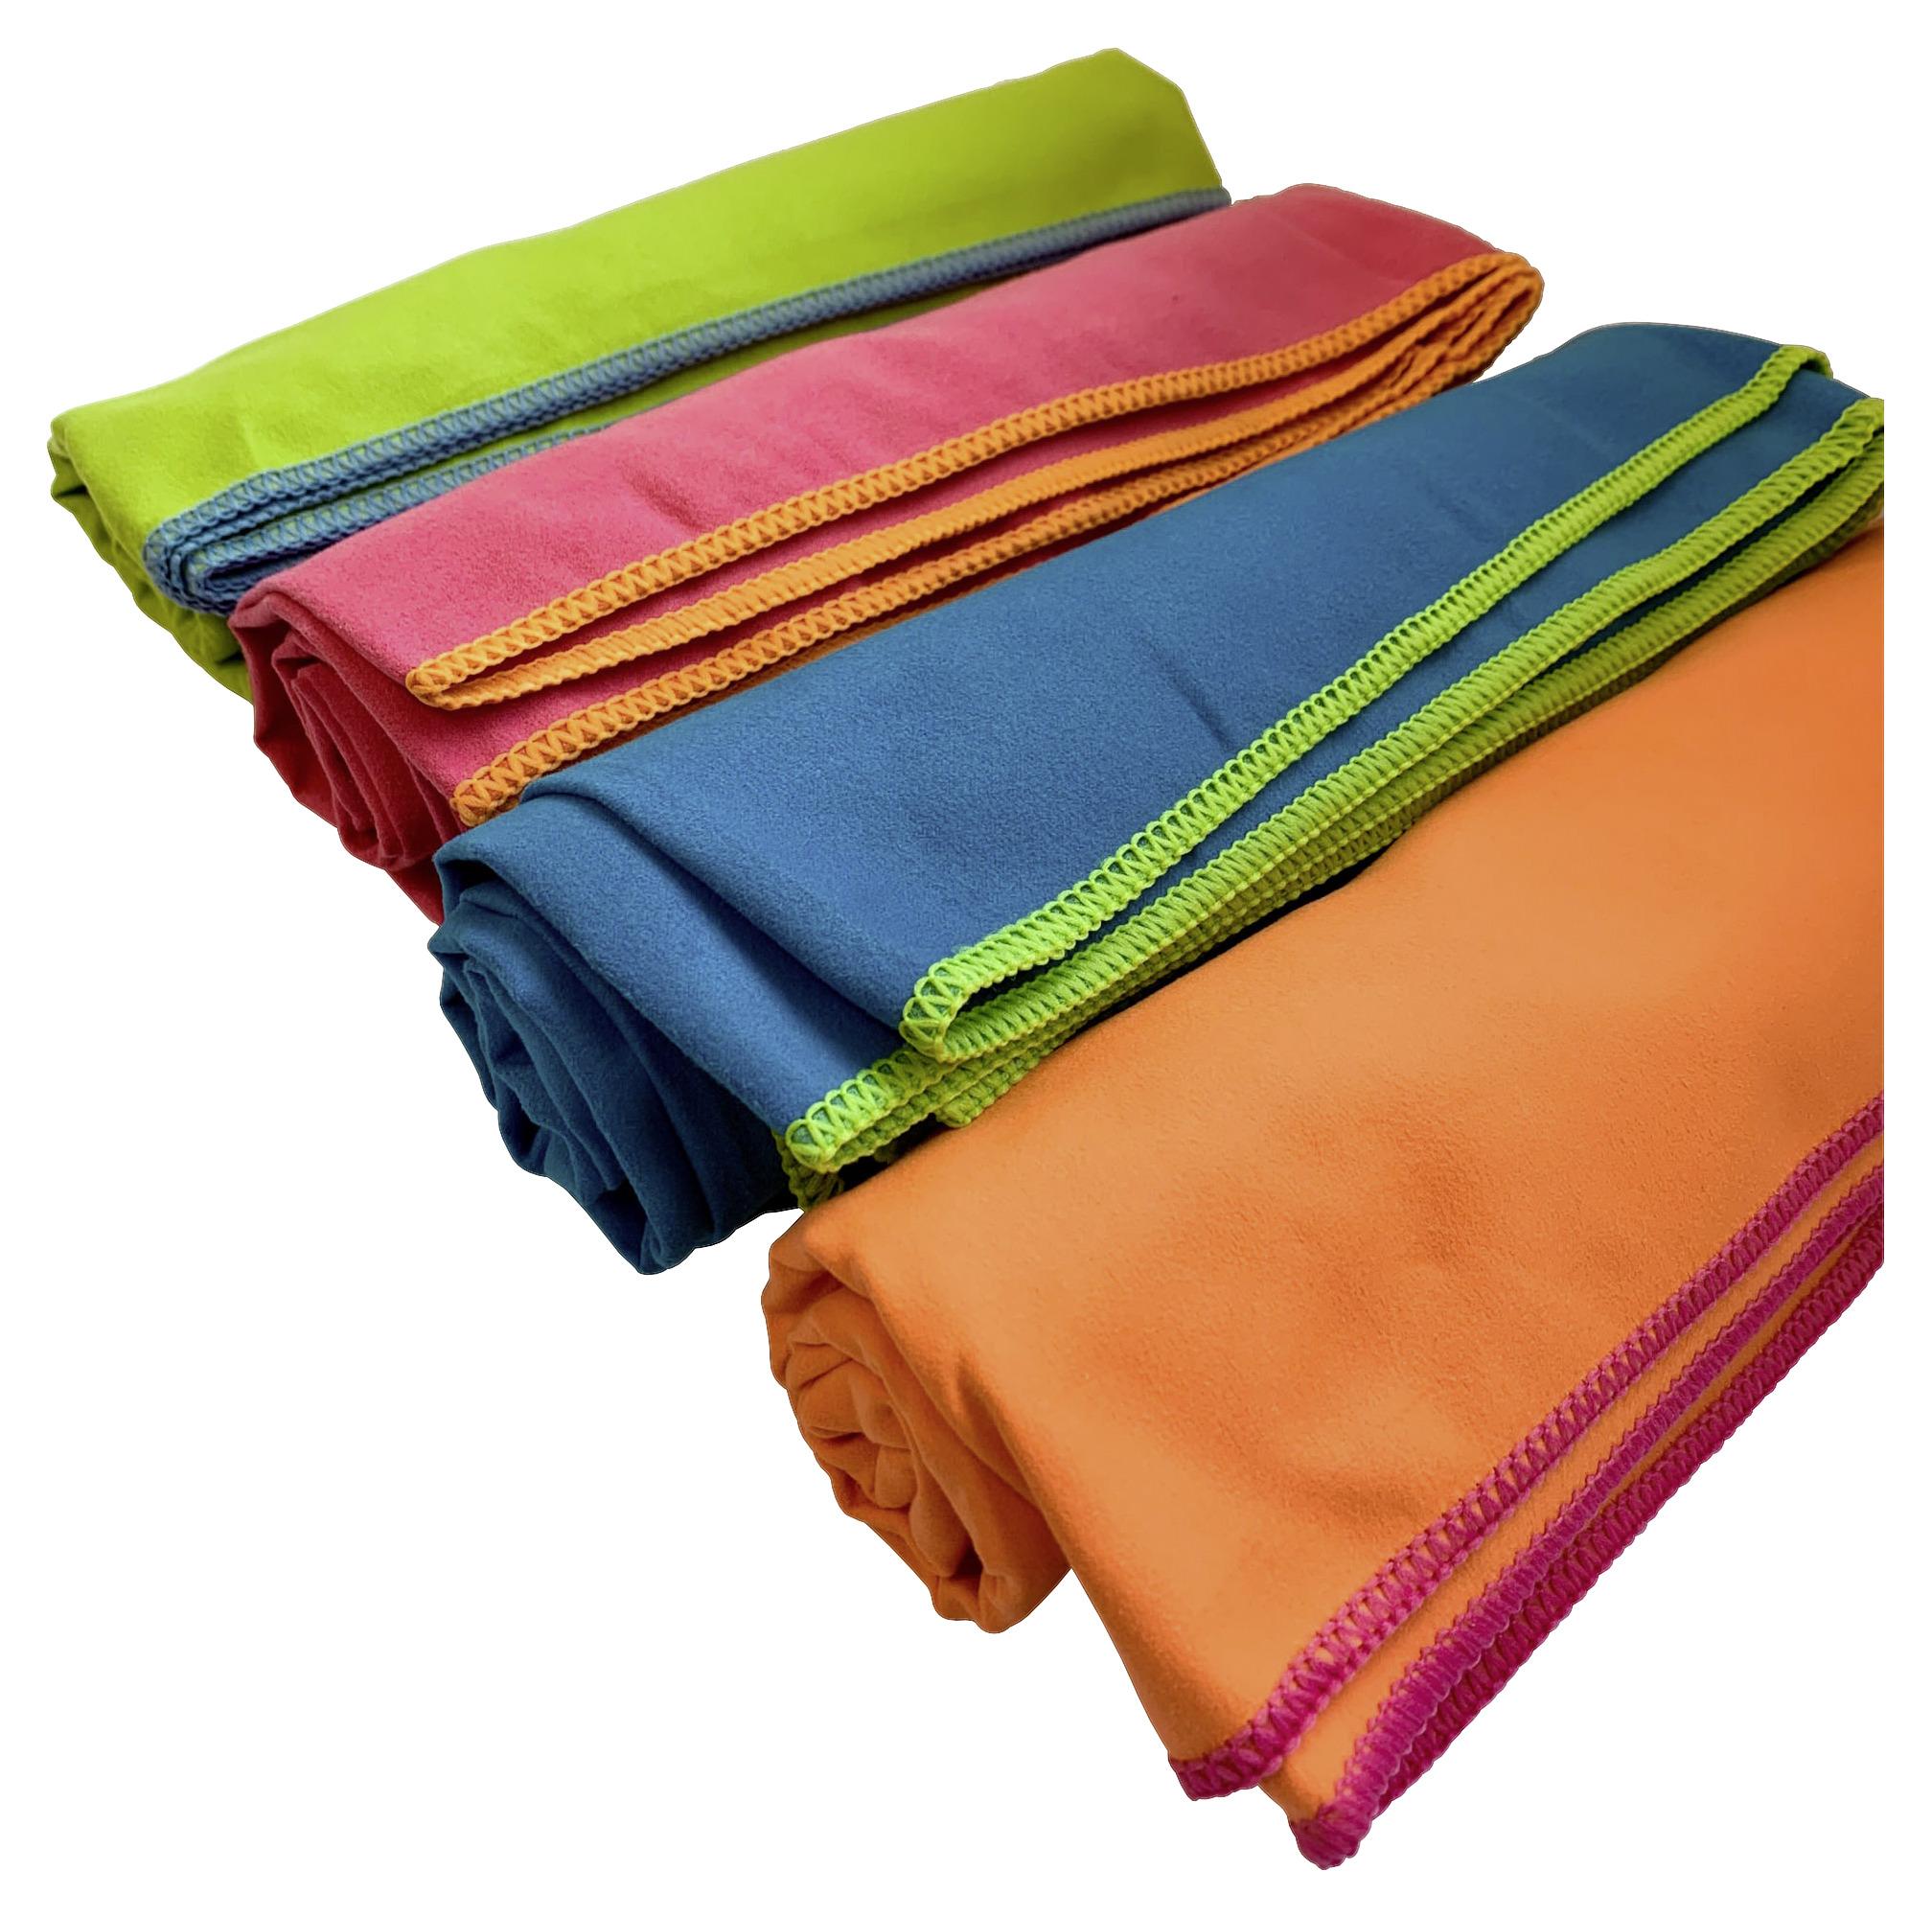 Brisača Šport - roza/modra, Basics, tekstil (75/100cm)